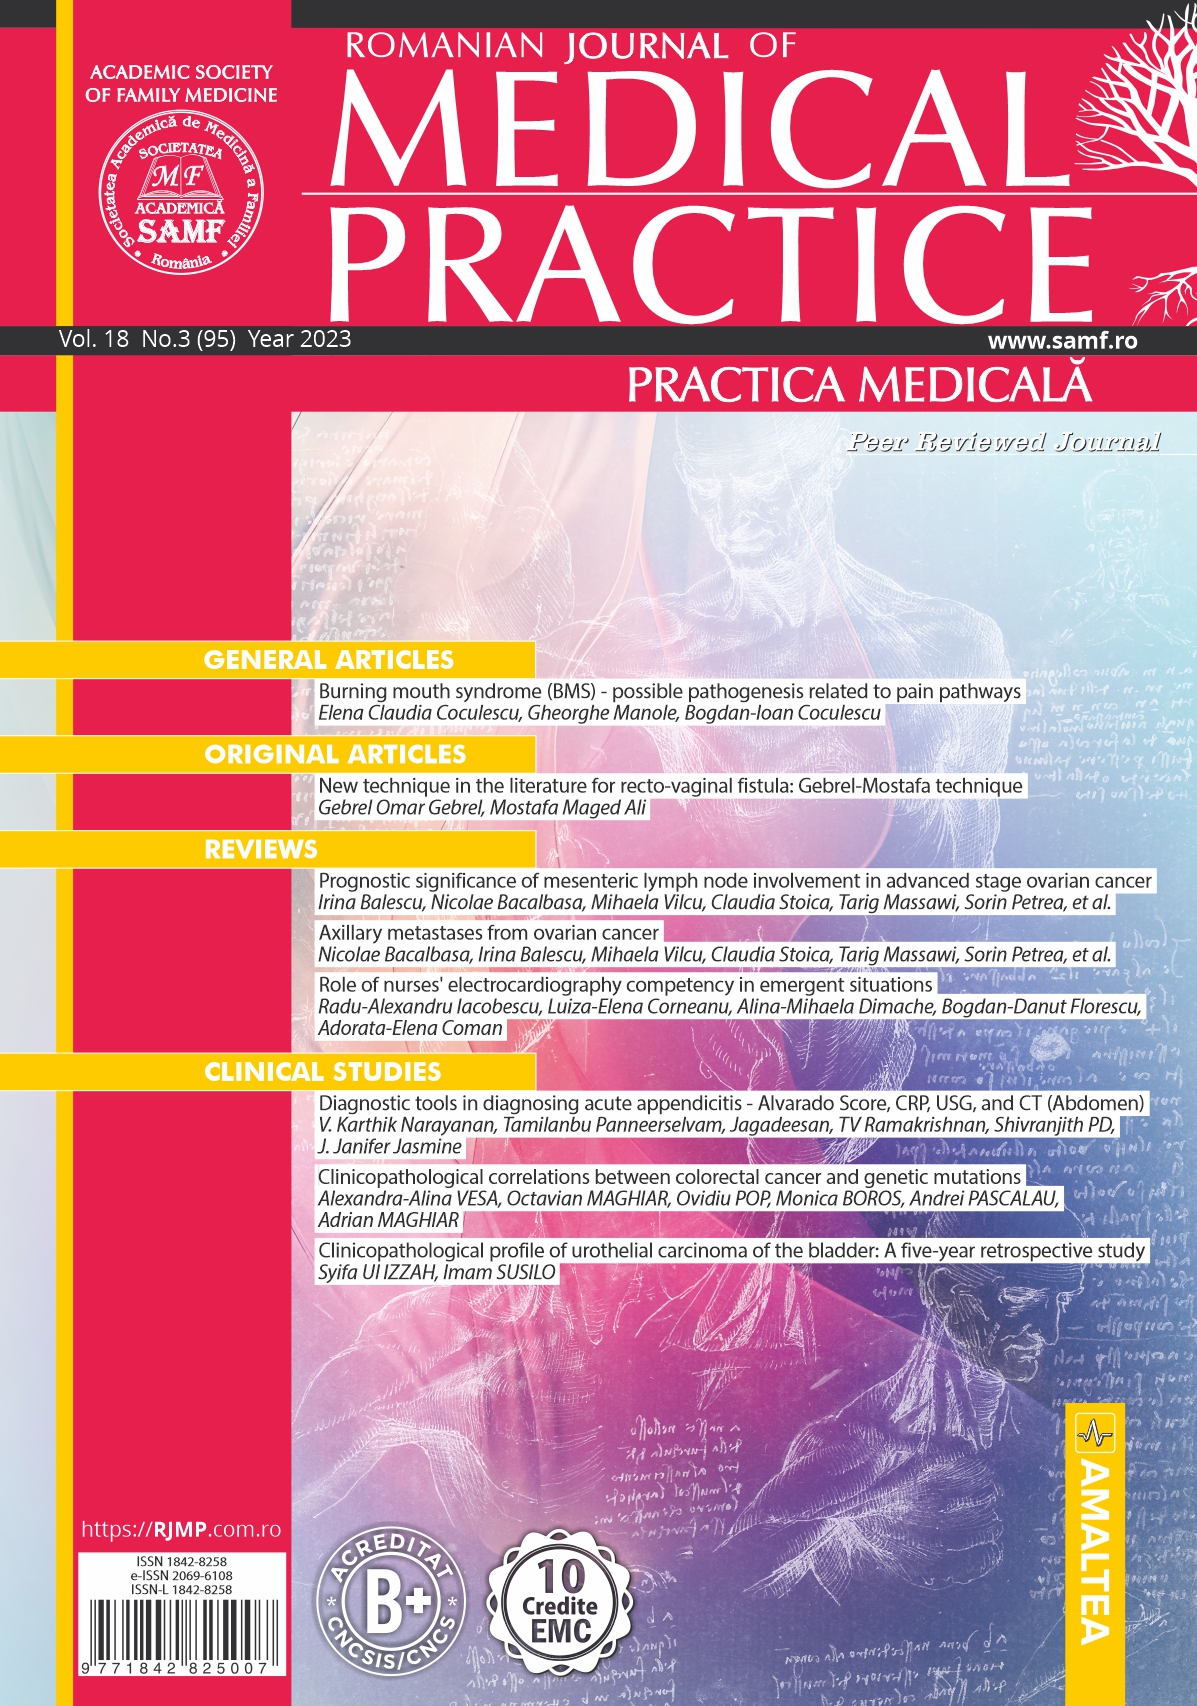 Romanian Journal of Medical Practice | Practica Medicala, Vol. 18, No. 3 (95), 2023